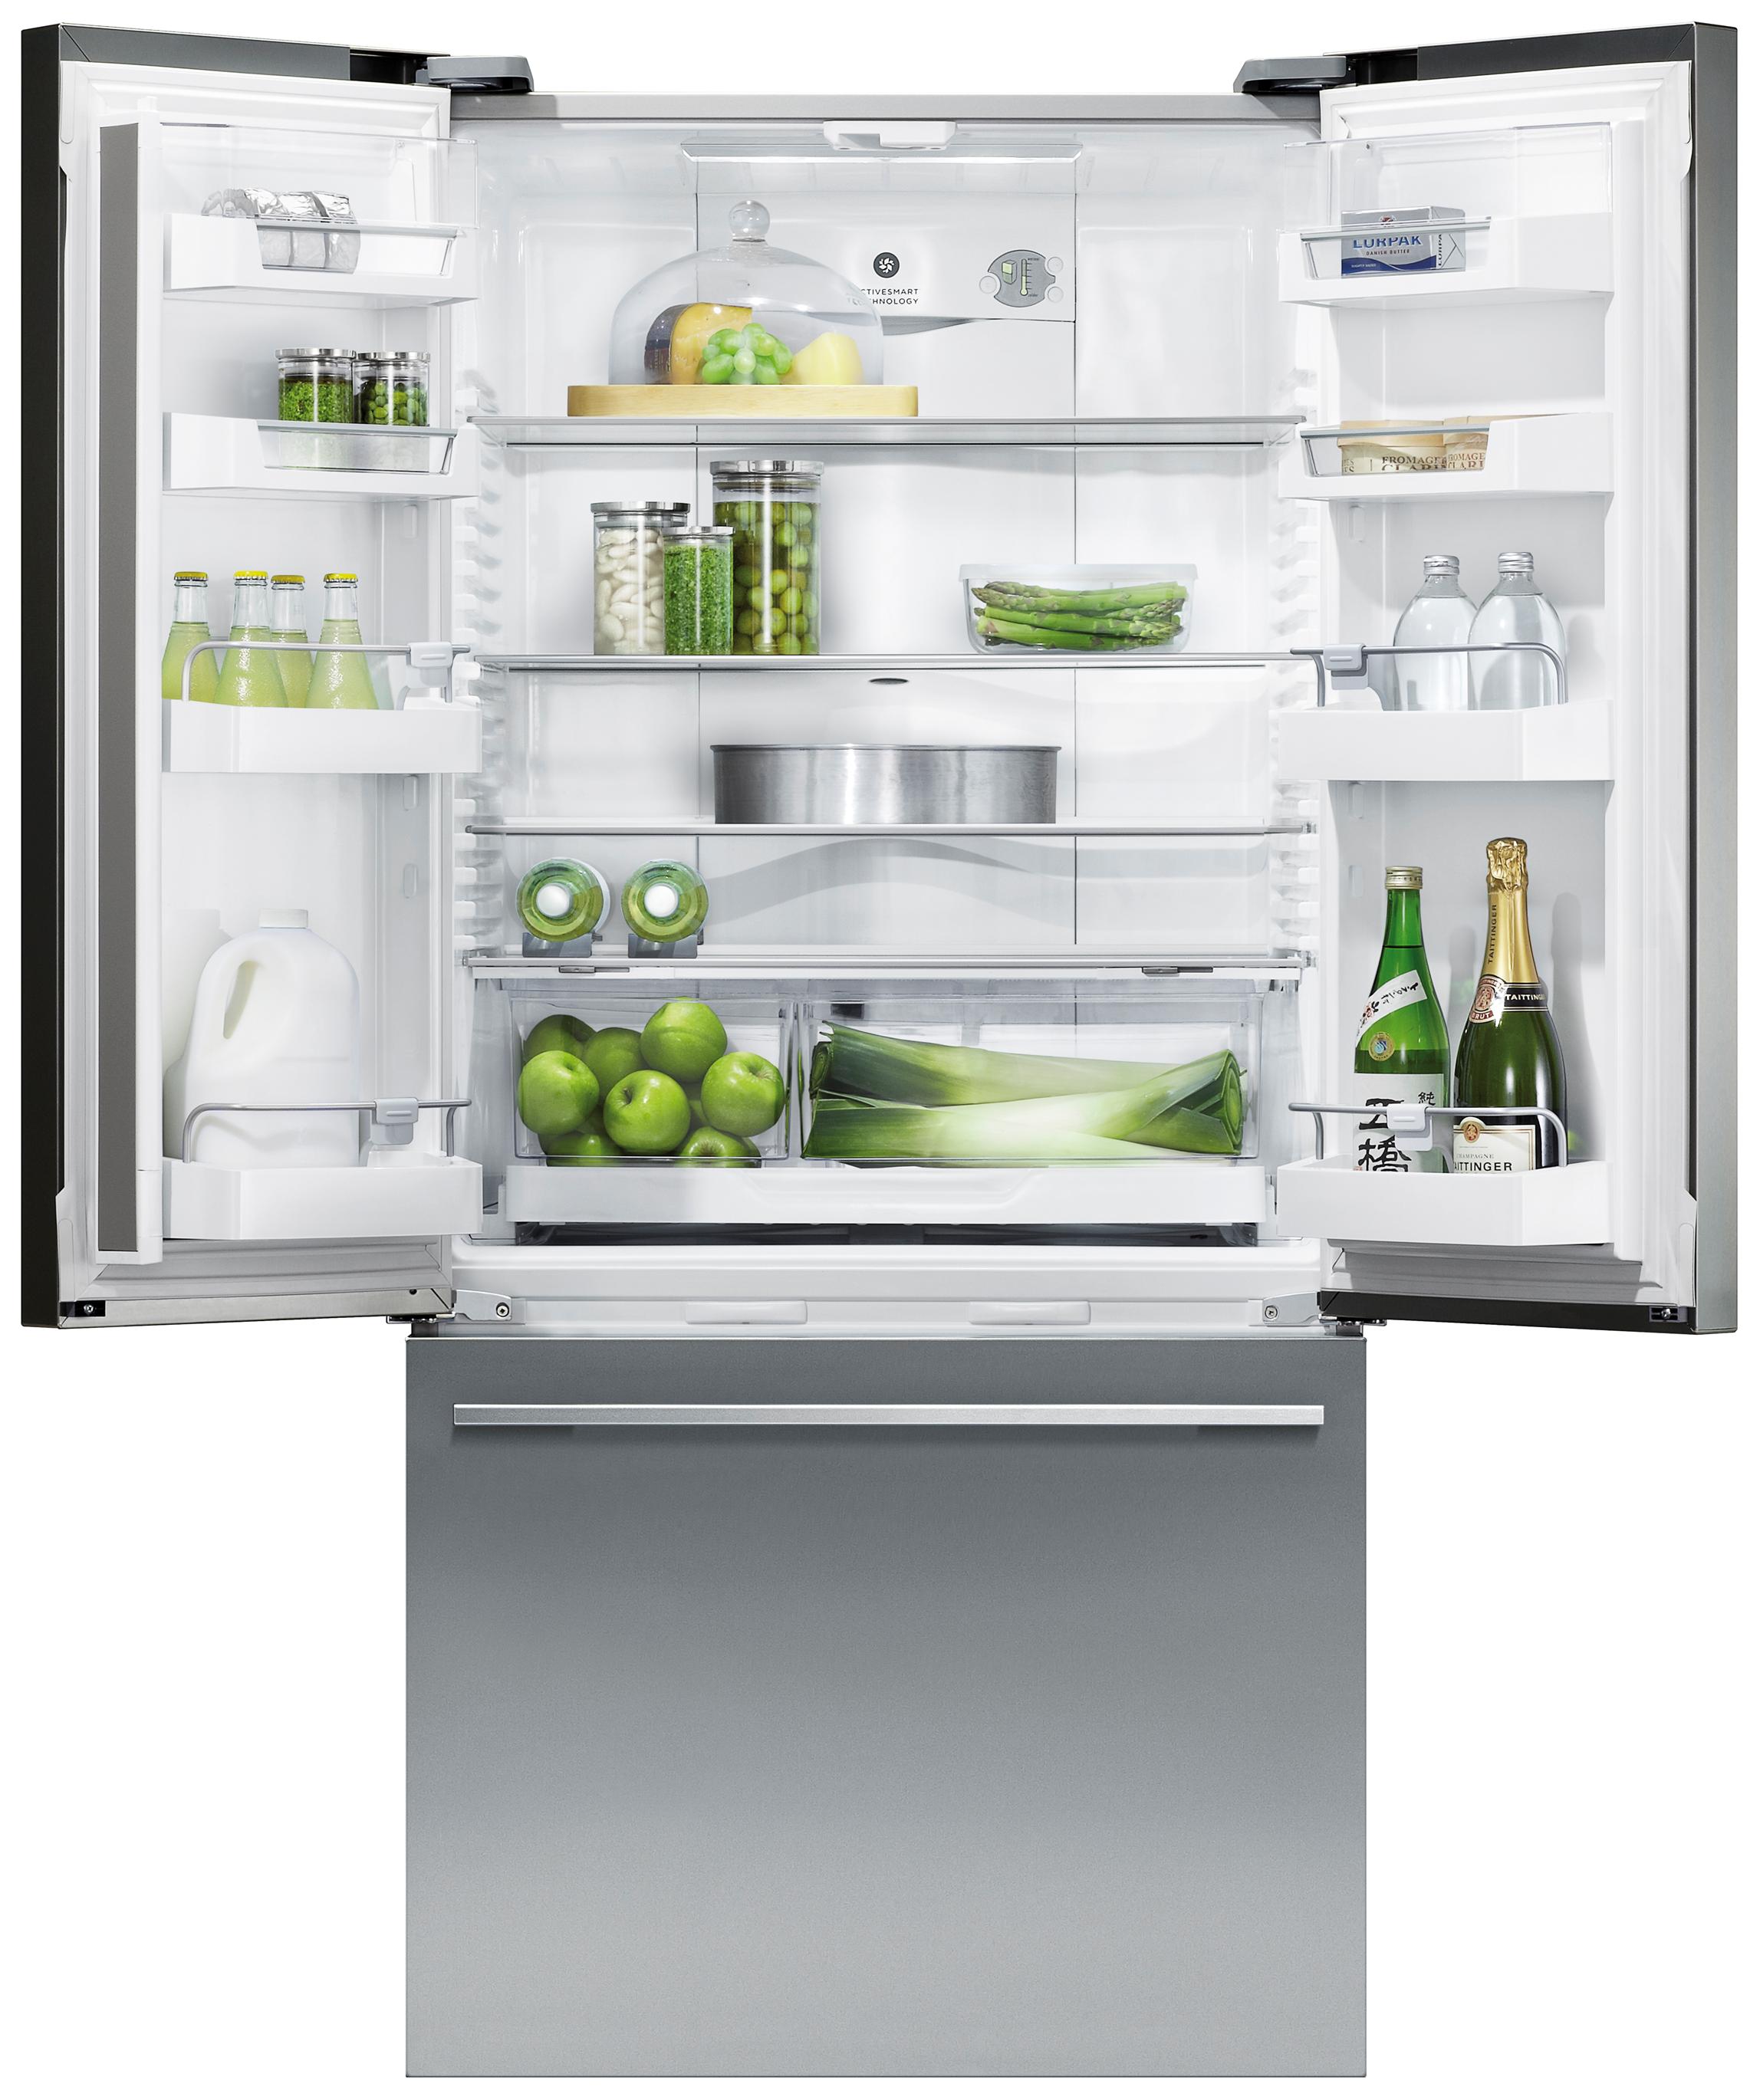 New ActiveSmart Refrigerator